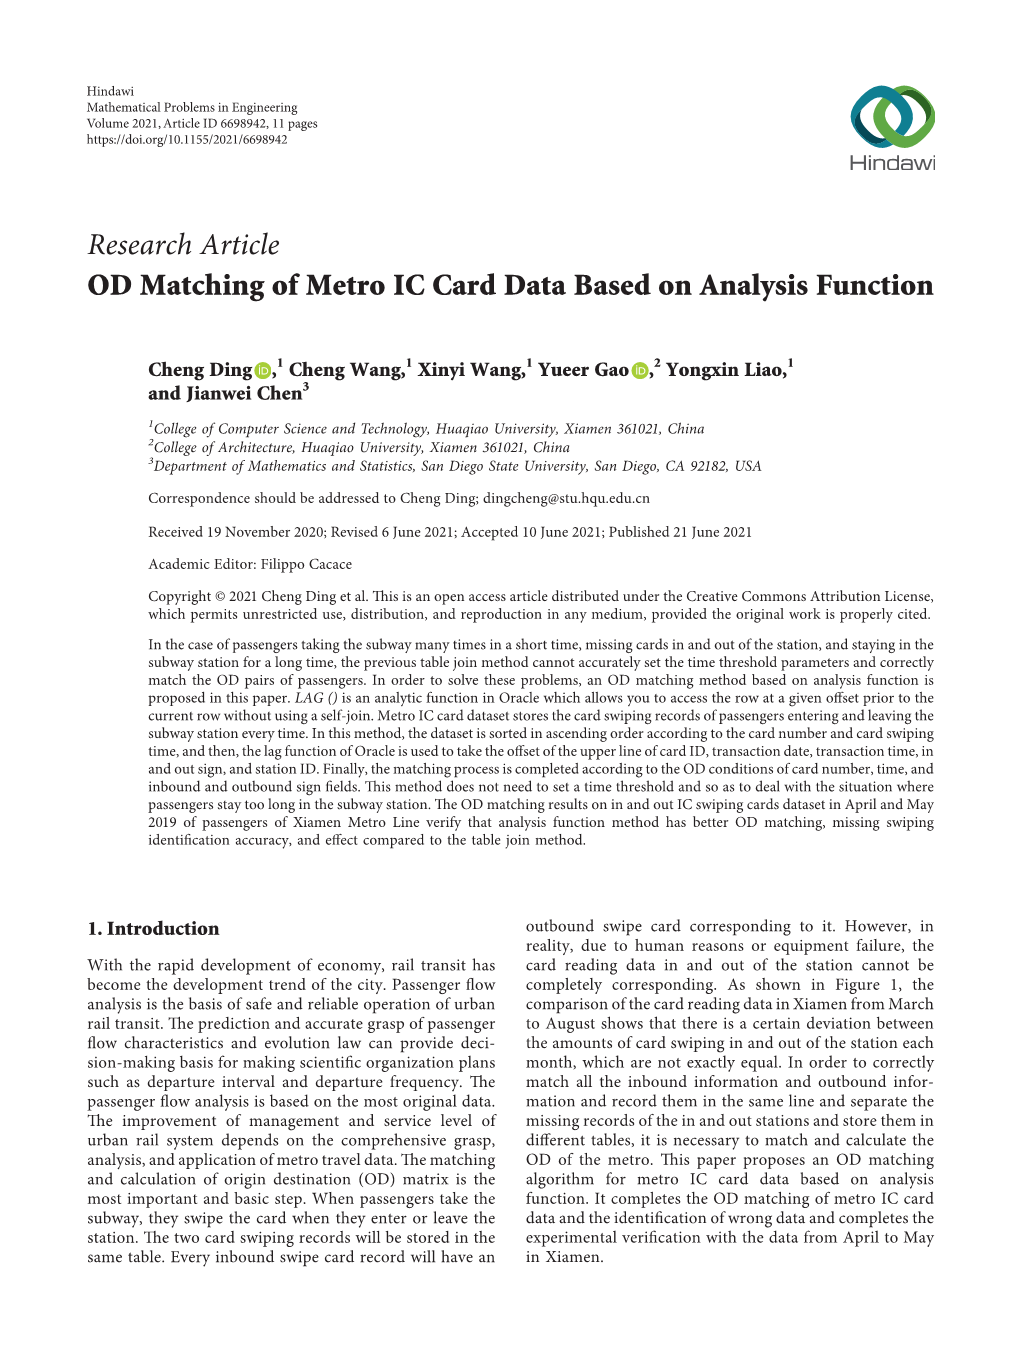 OD Matching of Metro IC Card Data Based on Analysis Function